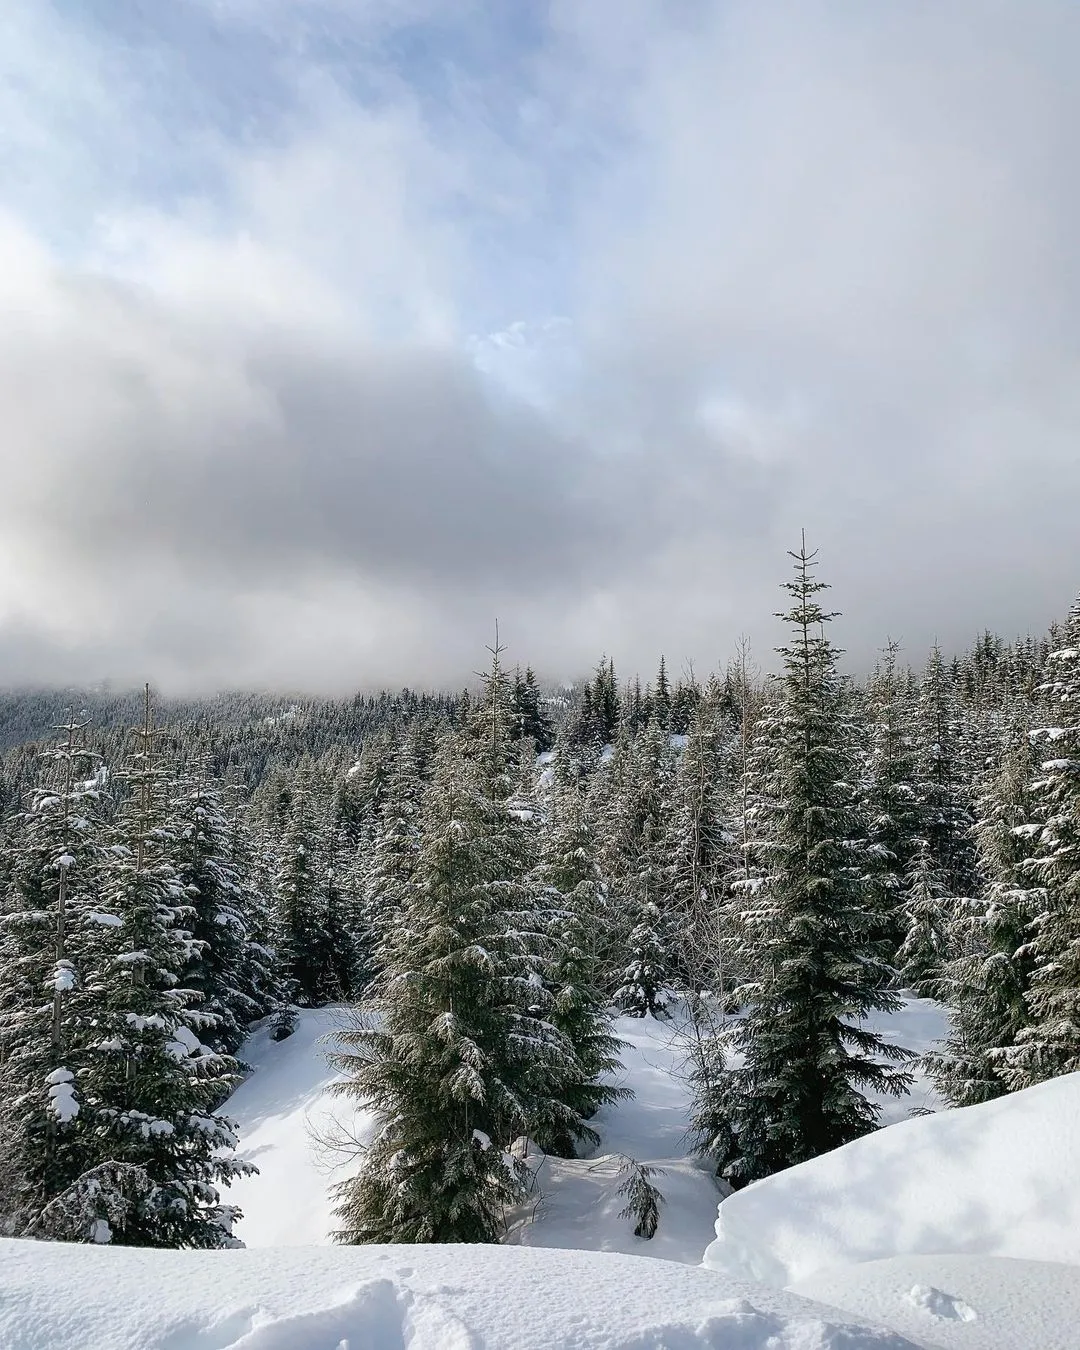 Winter in Whistler, British Columbia